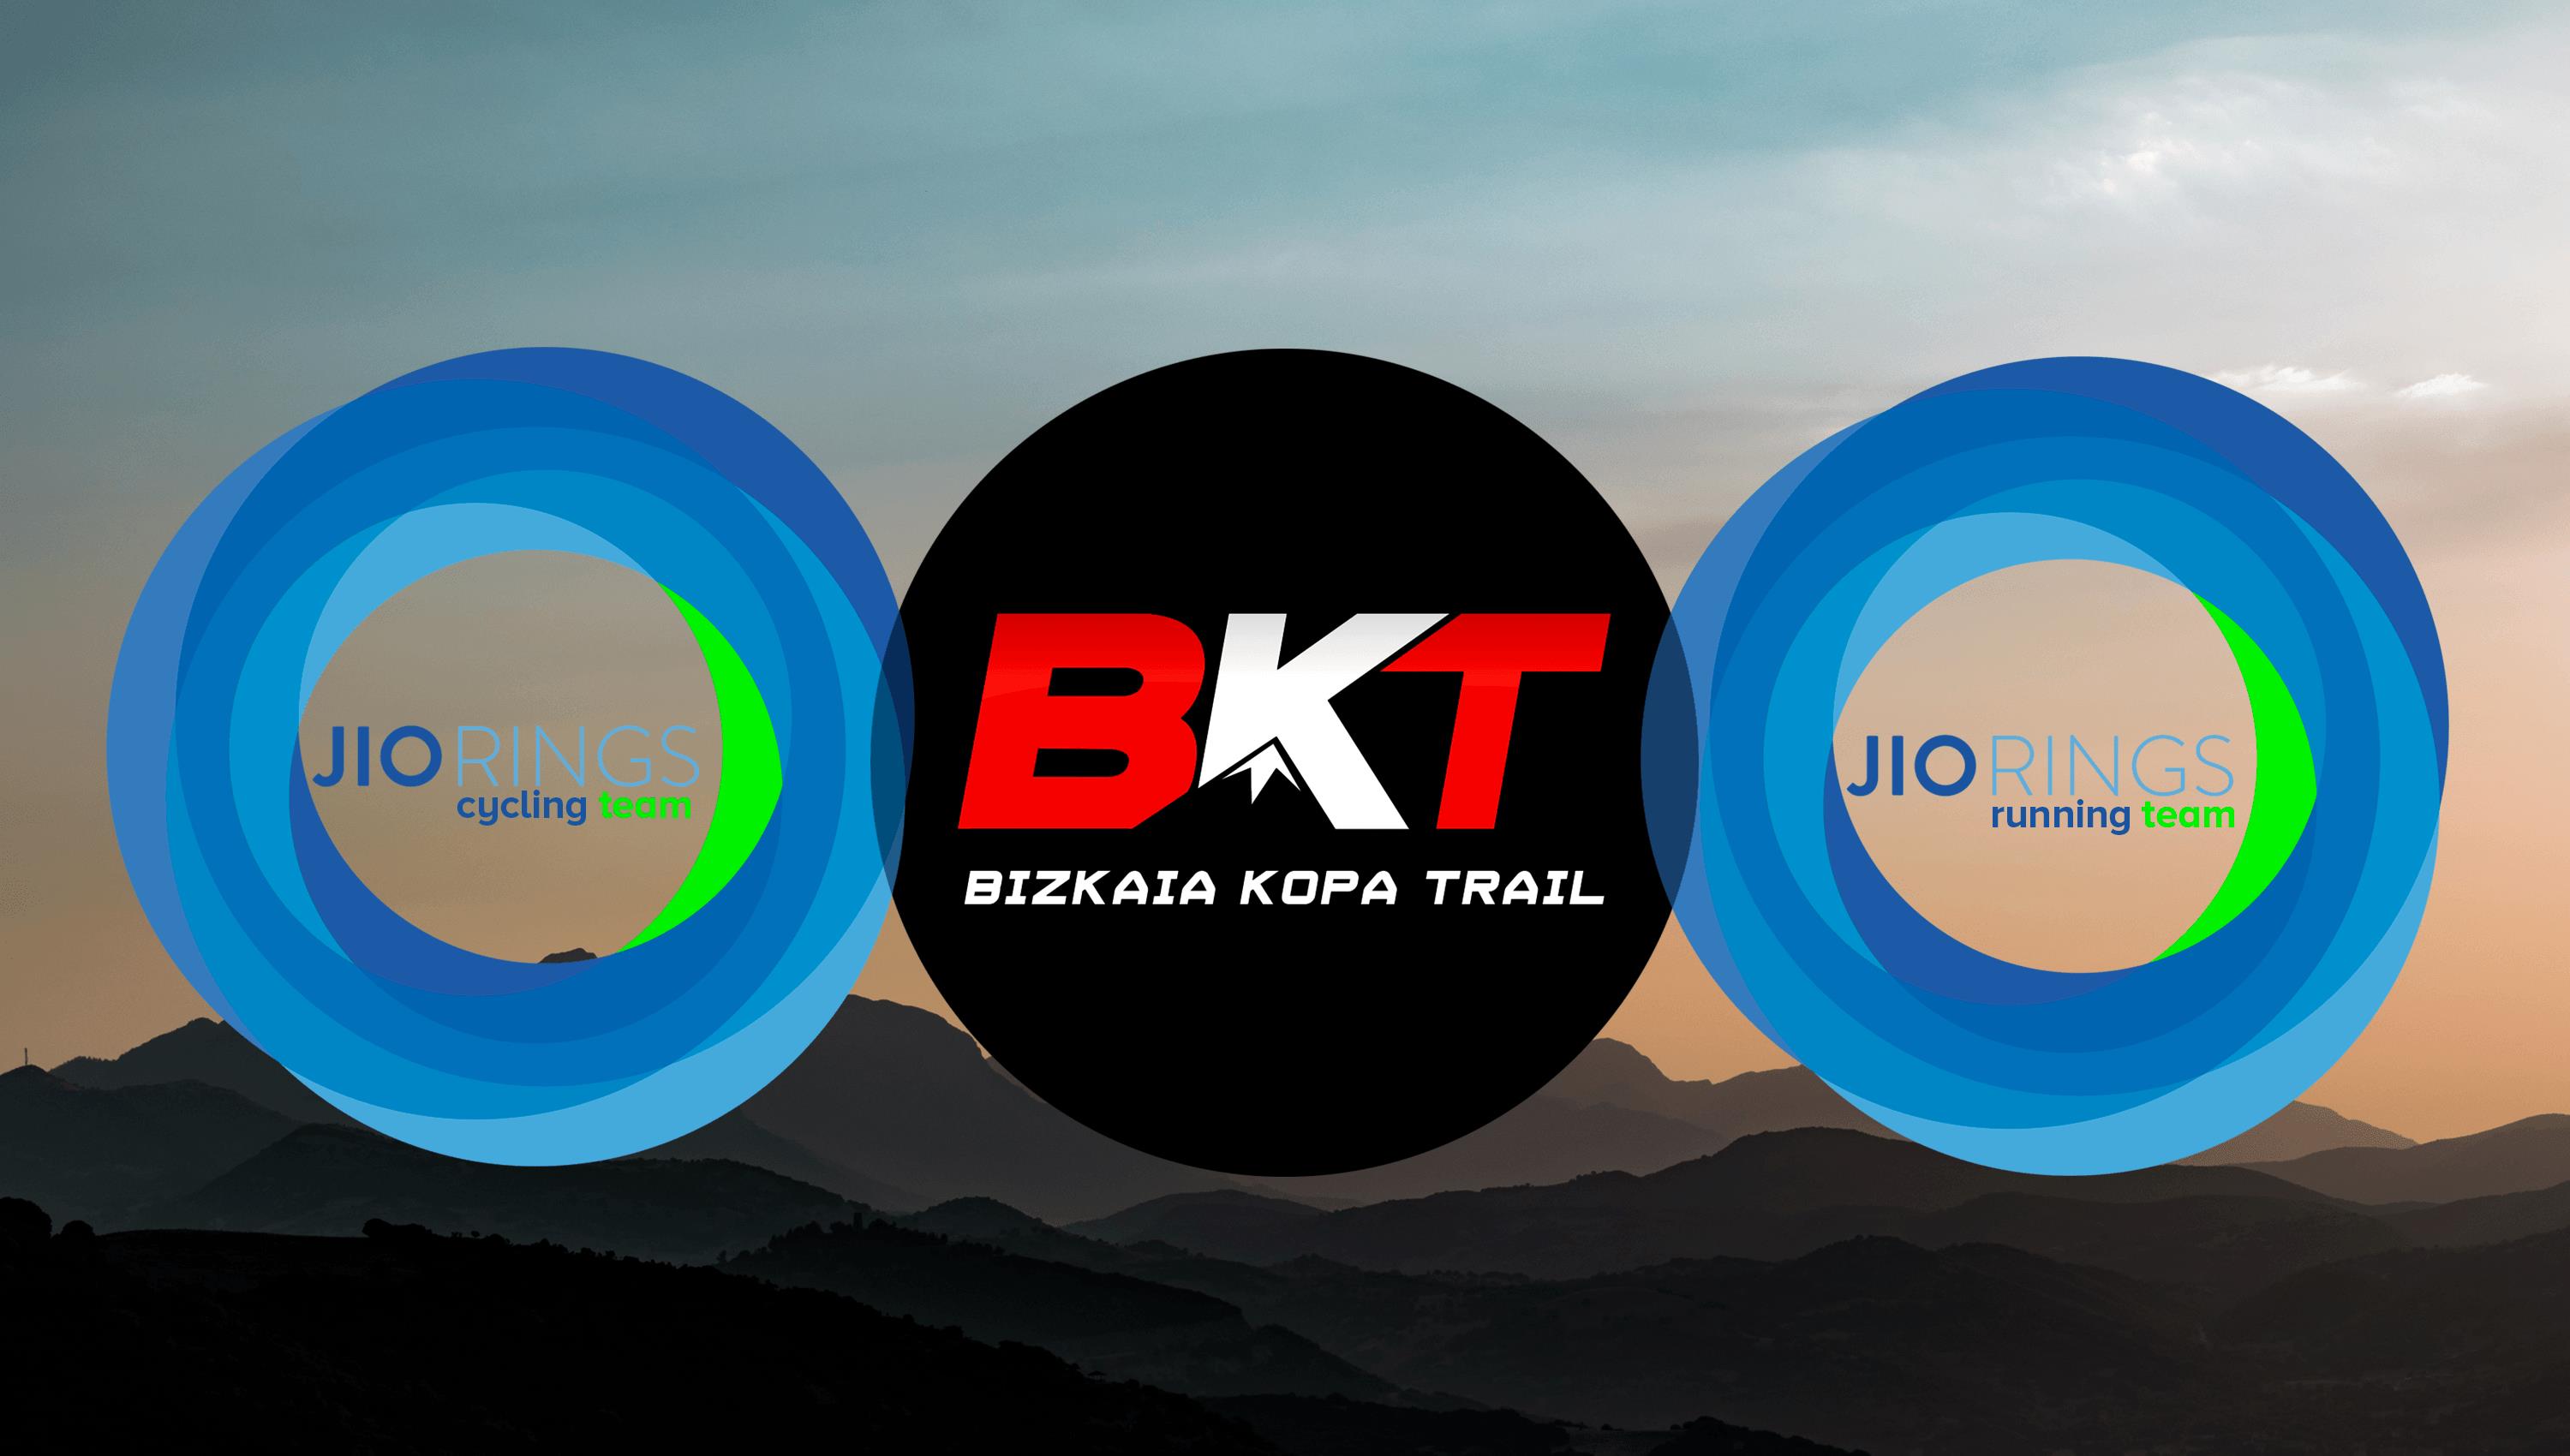 Deporte + JIOrings = Bizkaia Kopa Trail